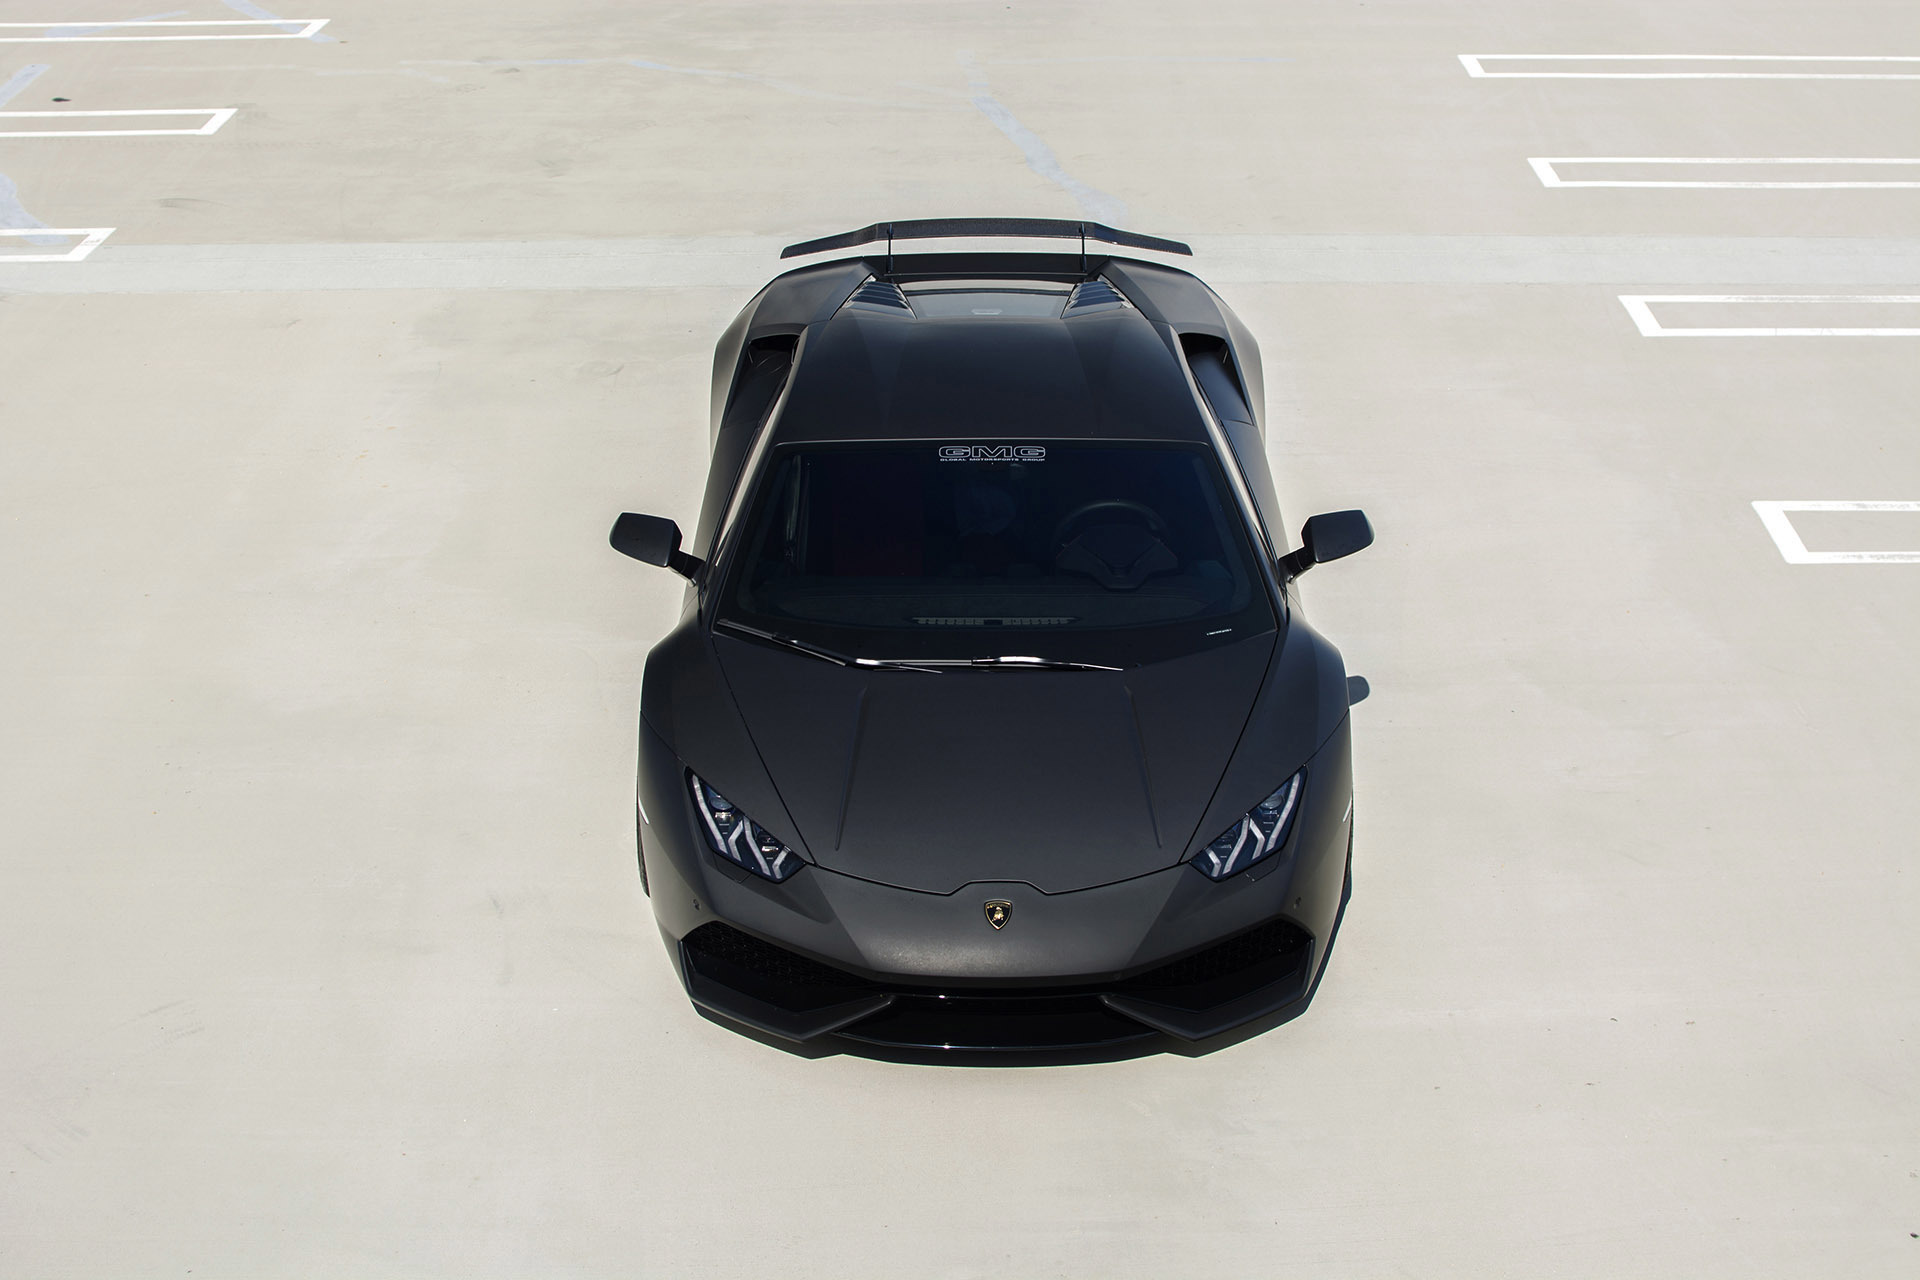 Baixe gratuitamente a imagem Lamborghini, Carro, Super Carro, Veículos, Carro Preto, Lamborghini Huracán na área de trabalho do seu PC